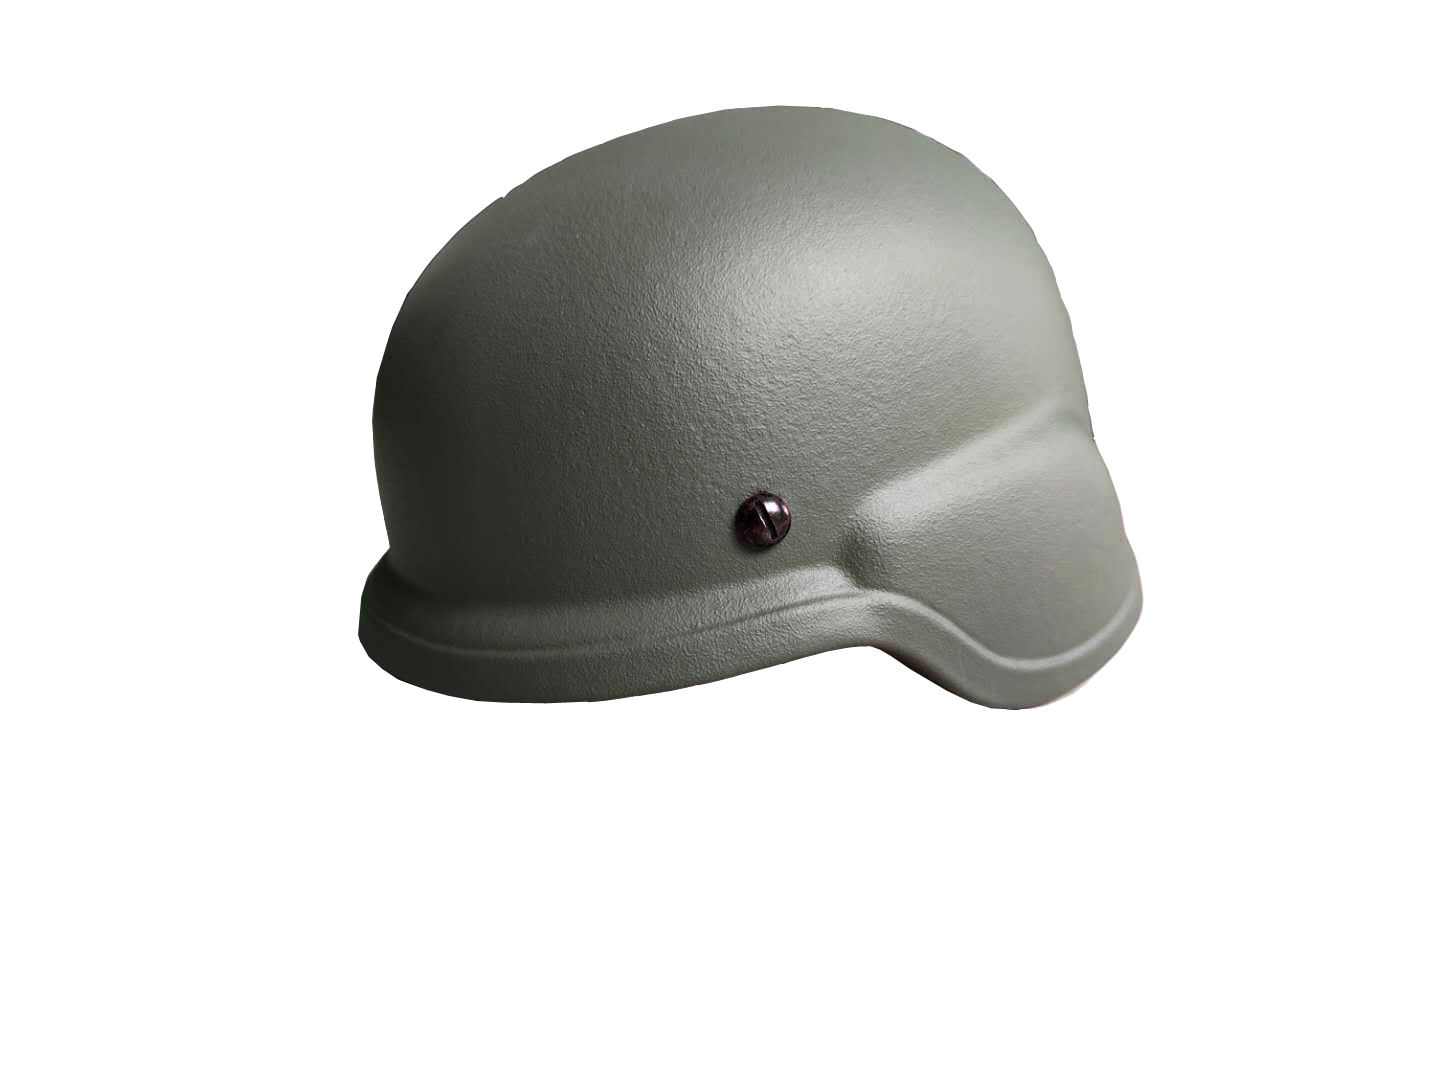 AK PASGT Anti Bullet Helmet PE Material Can Resist AK47 Lead Bullets [7.62mm Lead Core Bullet]